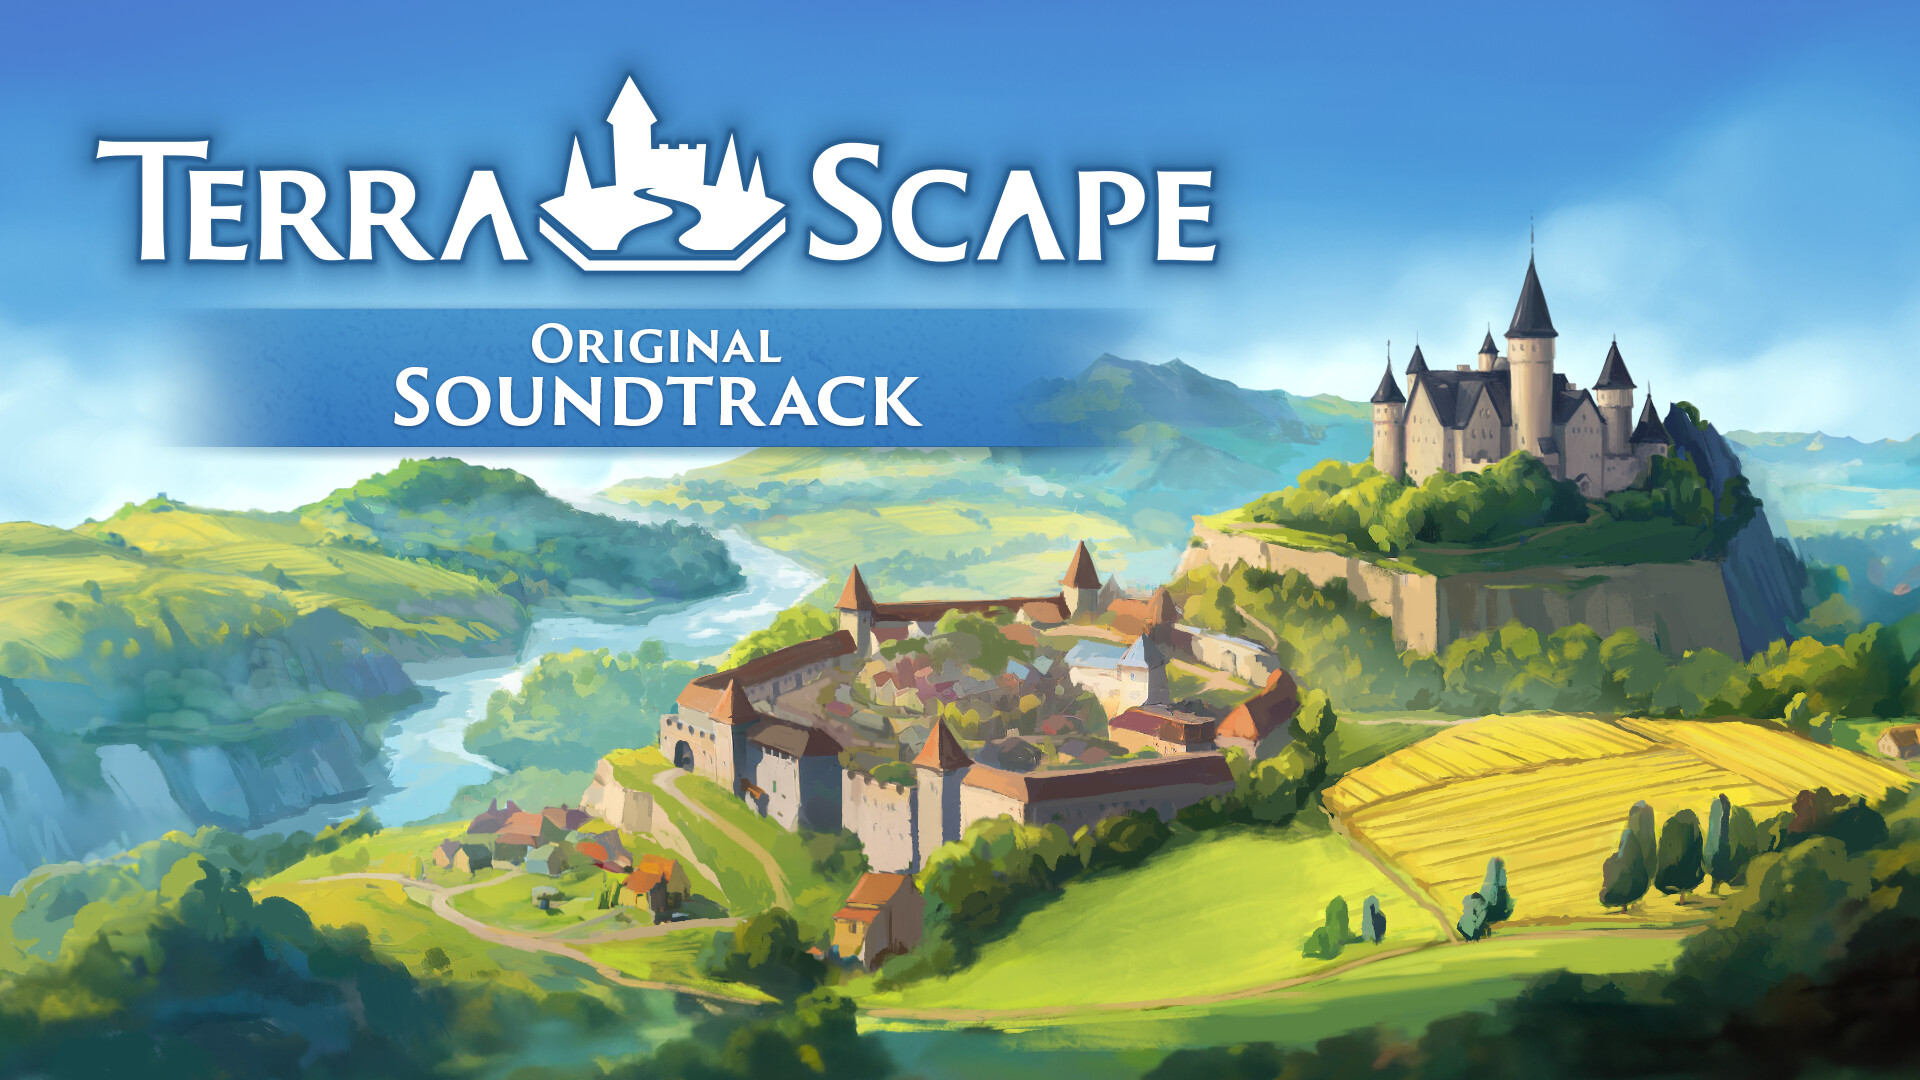 TerraScape - Original Soundtrack Featured Screenshot #1